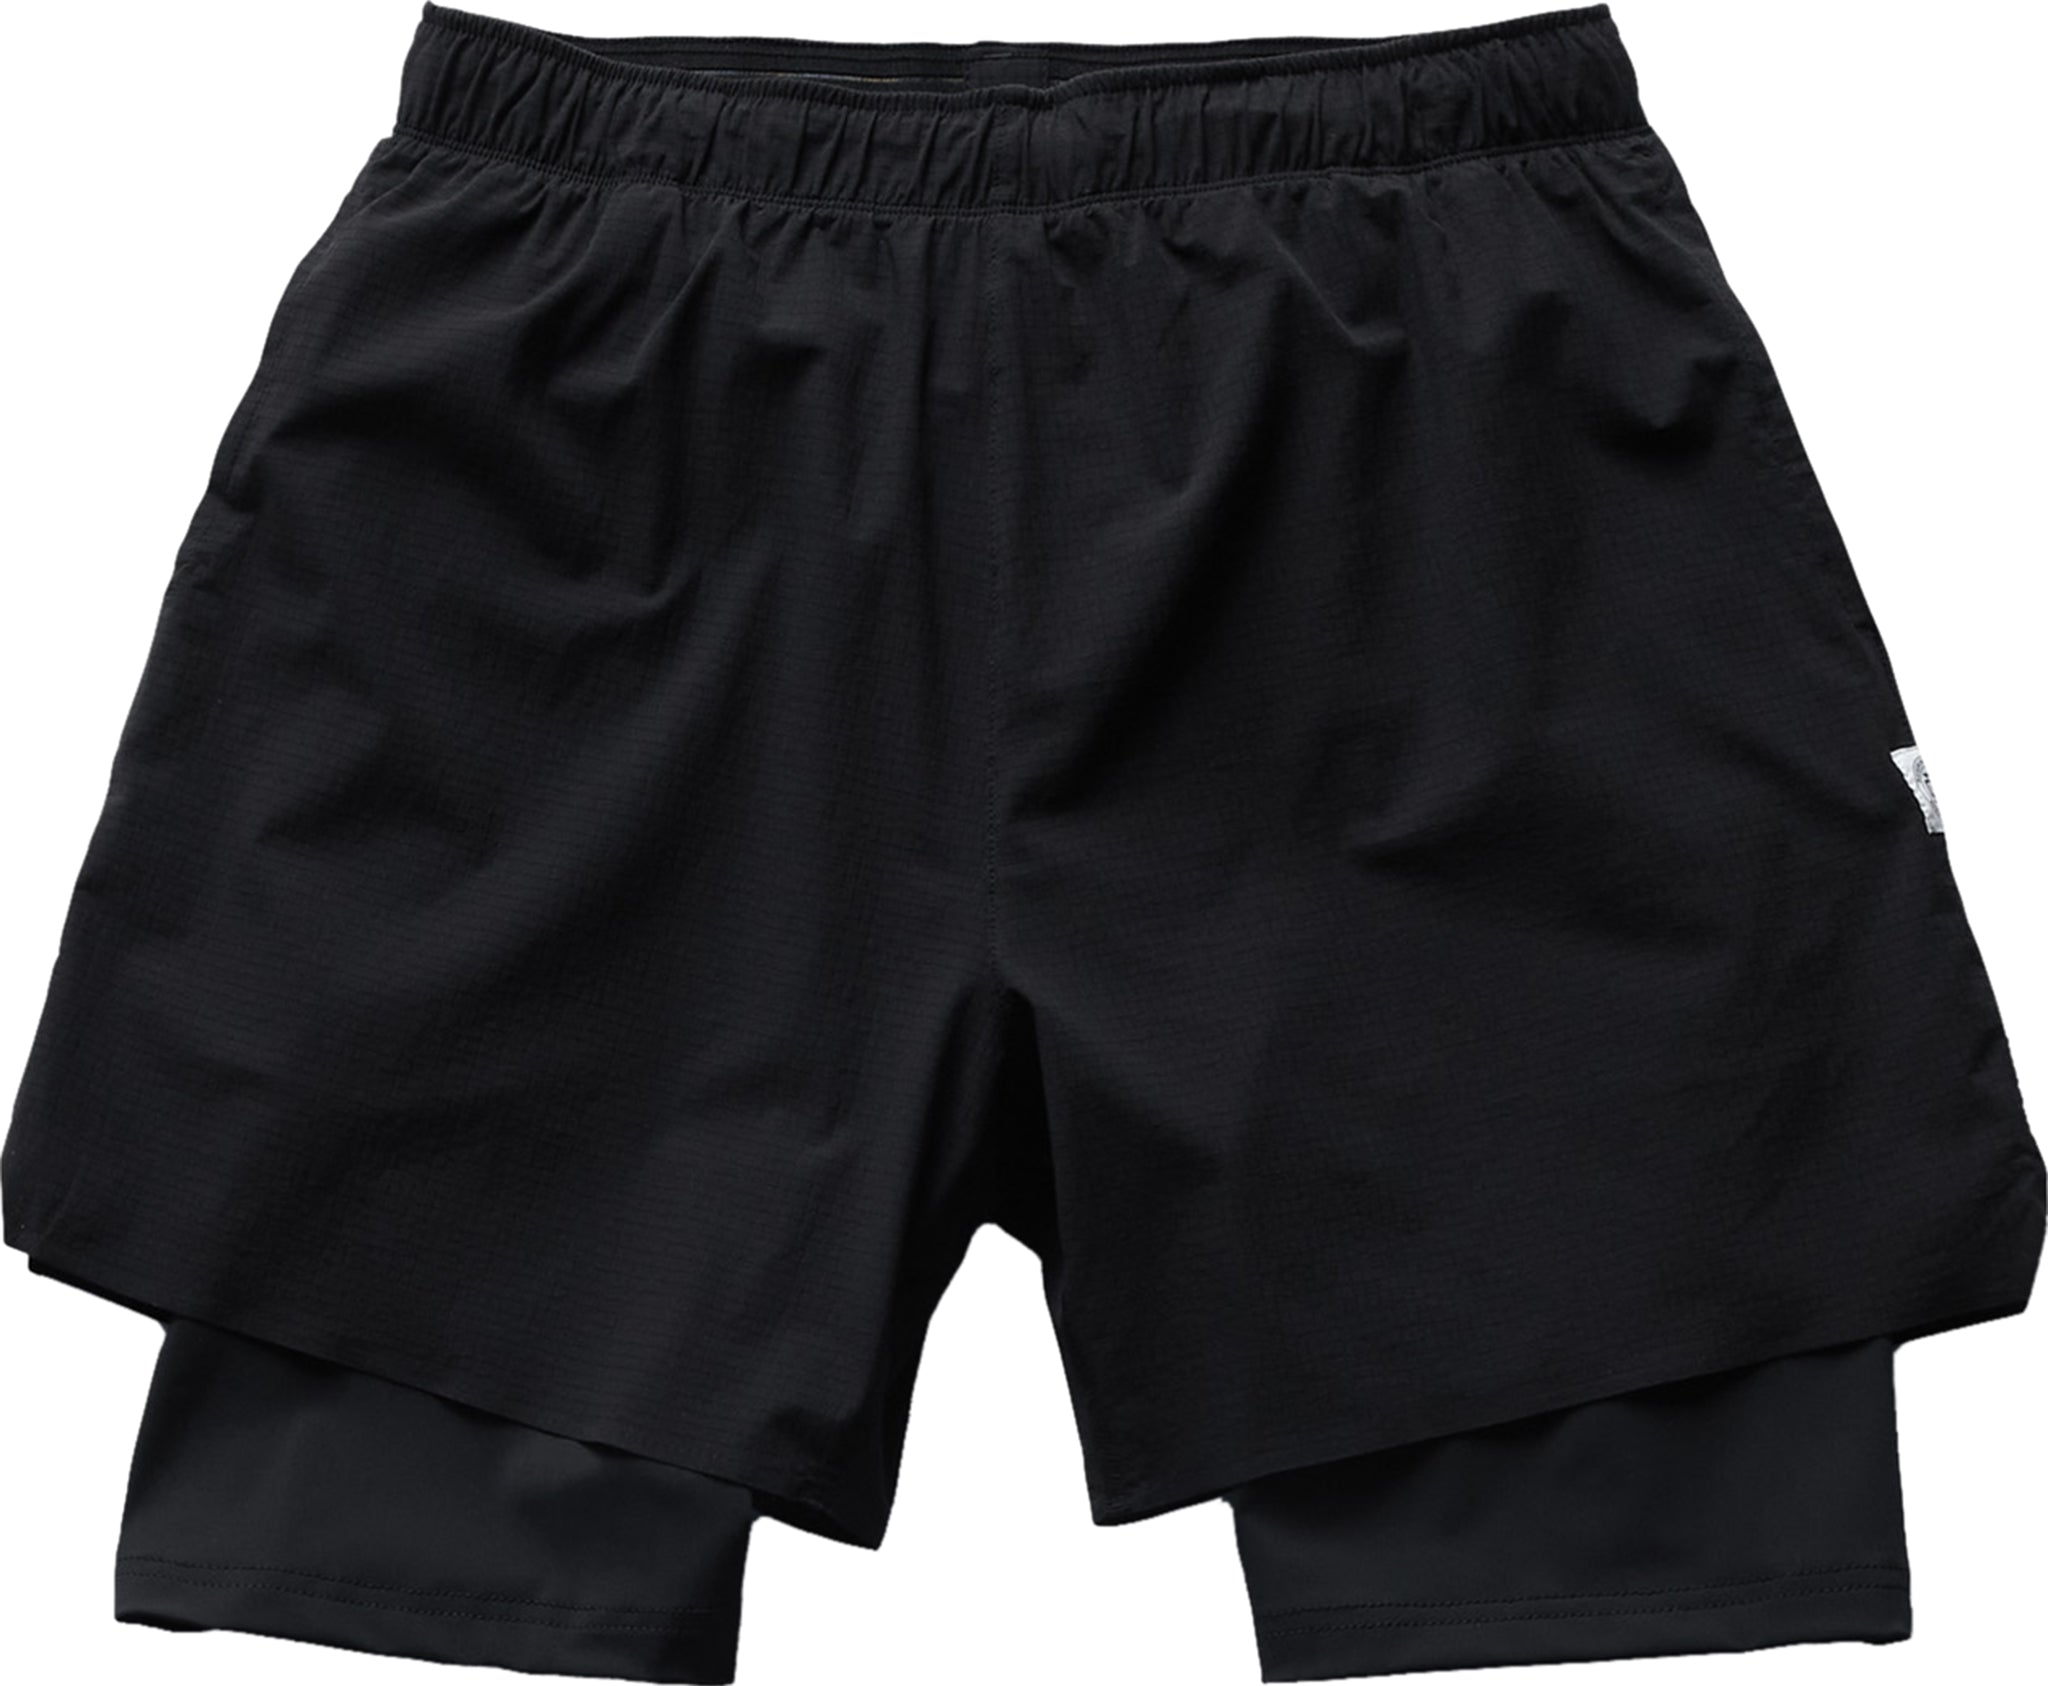 Men's Summer Breathable Shorts Gym Sports Running Sleep Casual Short Pants